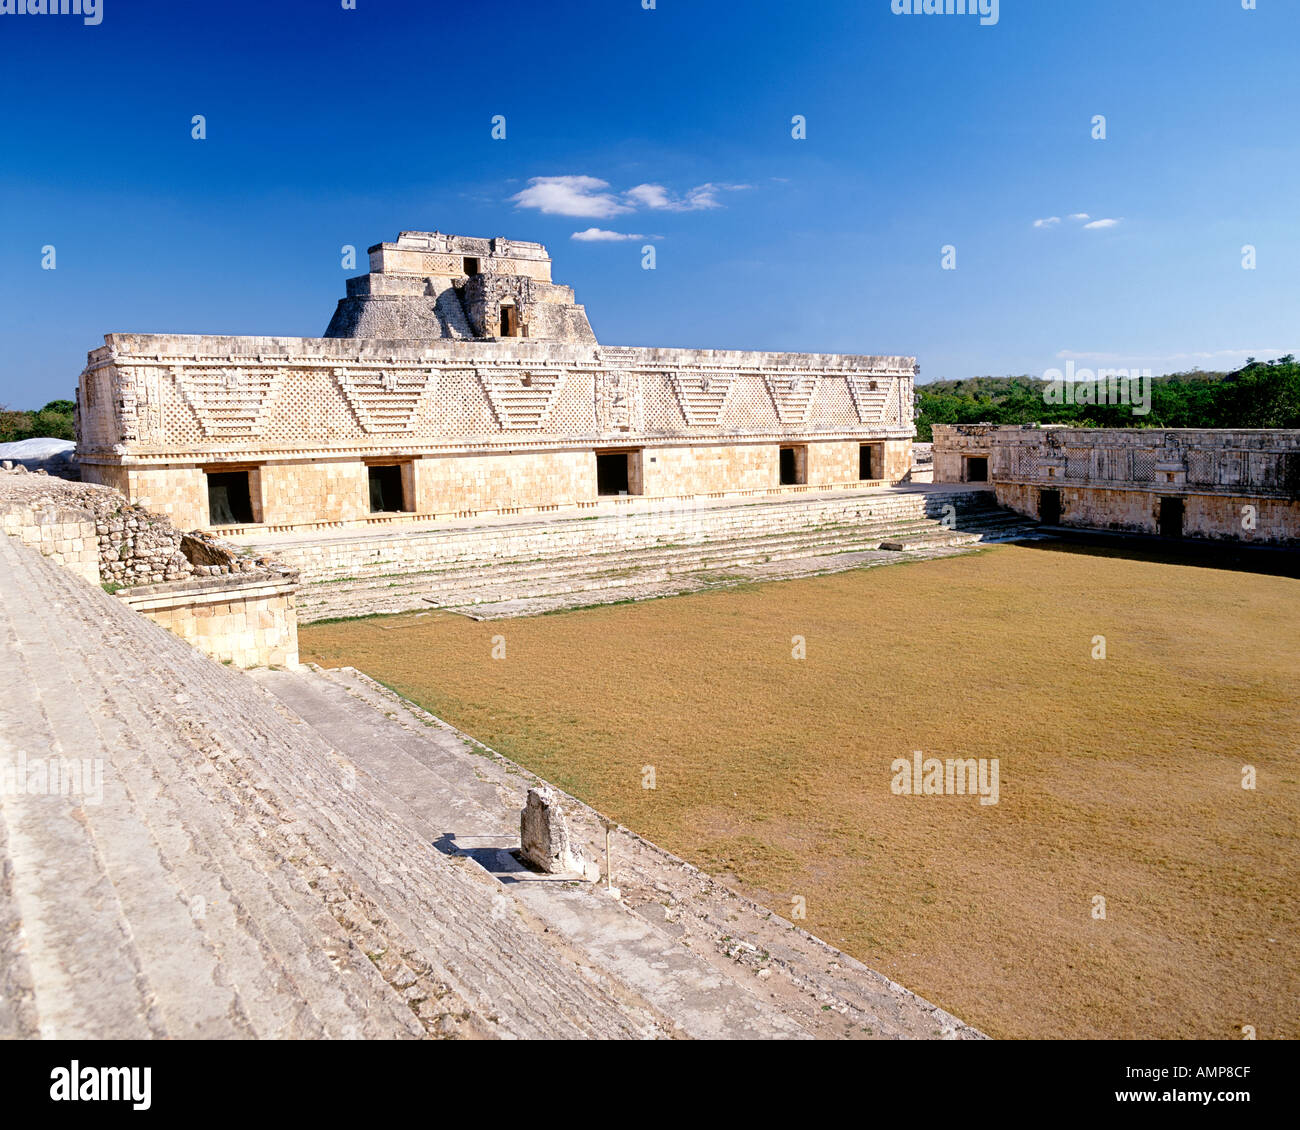 L'antiq Quadrangle, partie de l'Uxmal ruines Maya du Yucatan au Mexique province. Banque D'Images